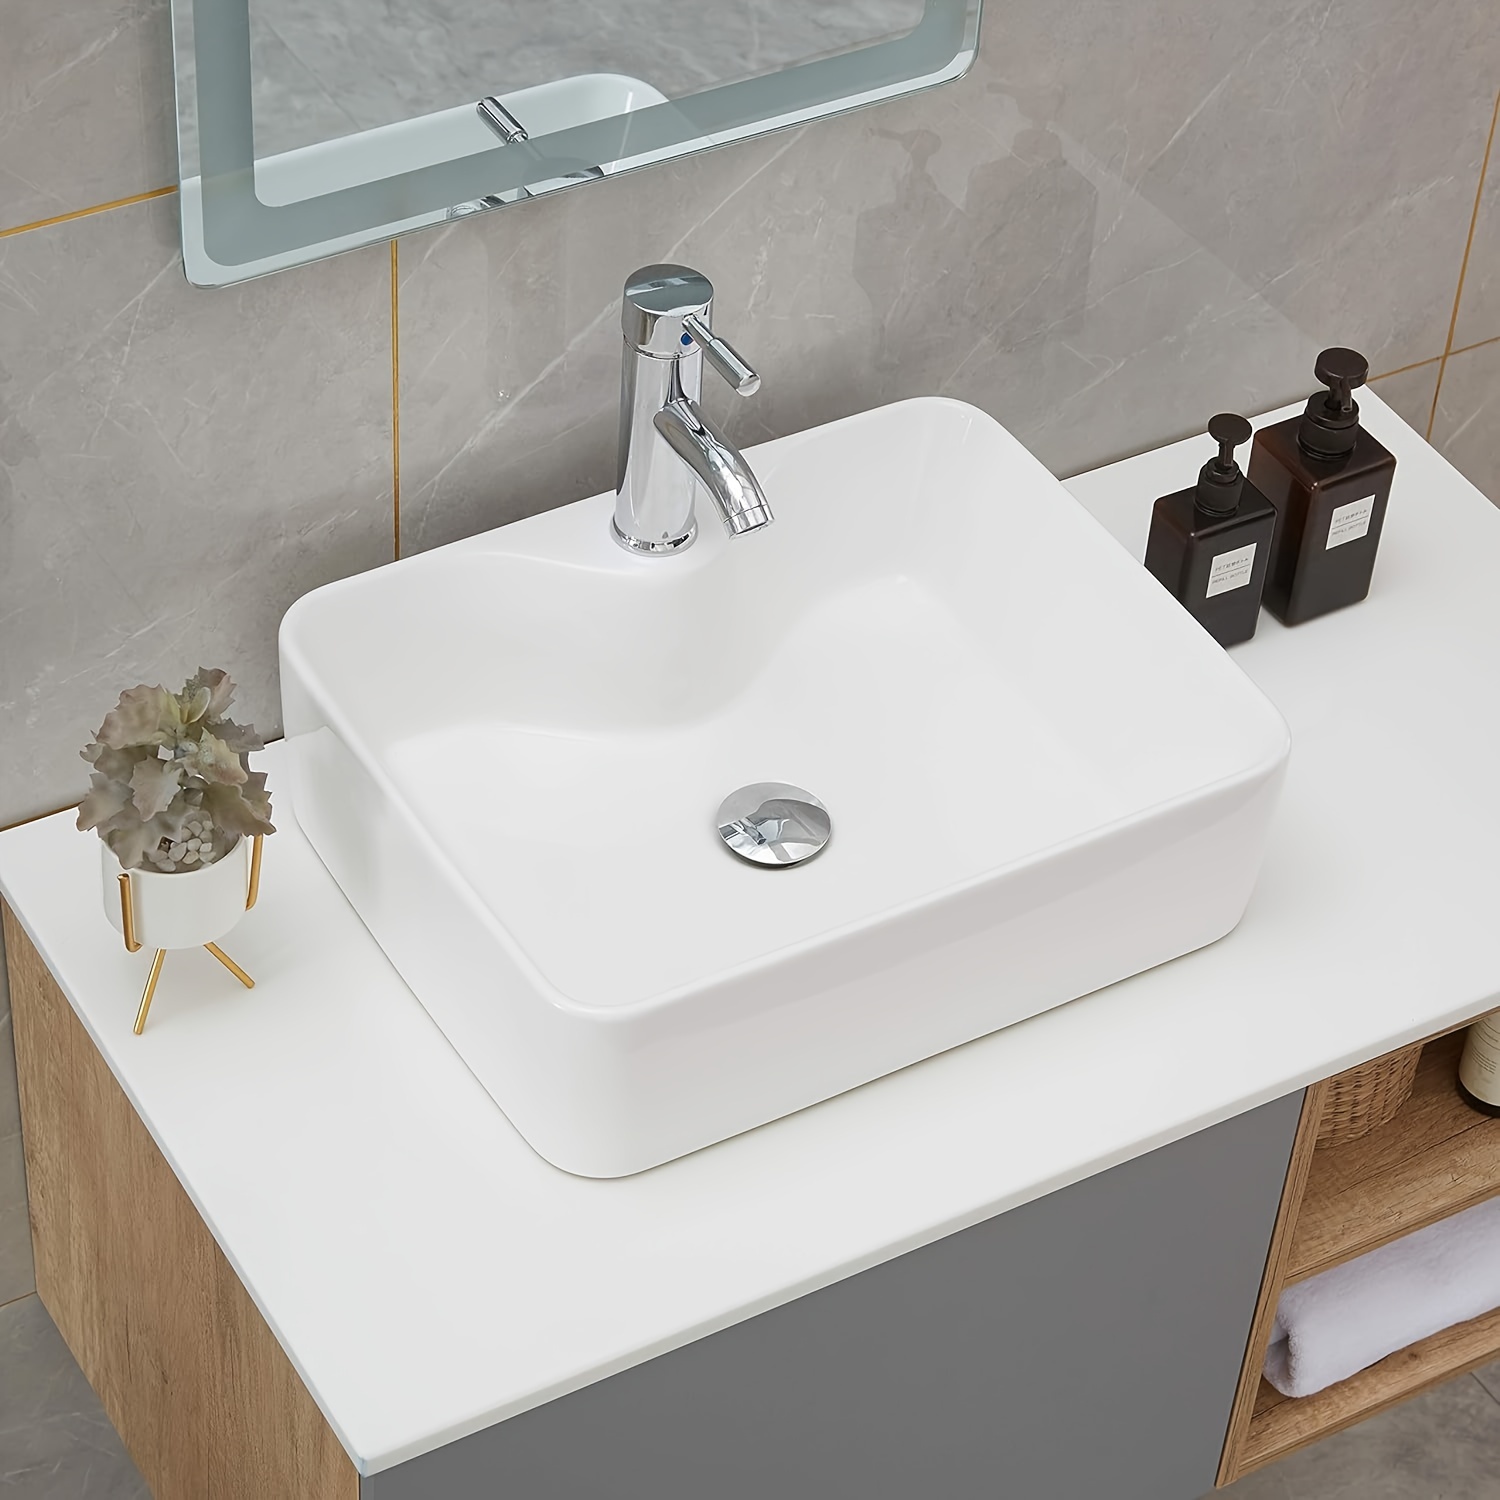 

1pc 19" X 15" Countertop Rectangle Vessel Sink, Above Counter Ceramic Hand Wash Basin Vanity Sink, Bathroom Sanitary Ware Art Basin Vessel Sink Bowl, White